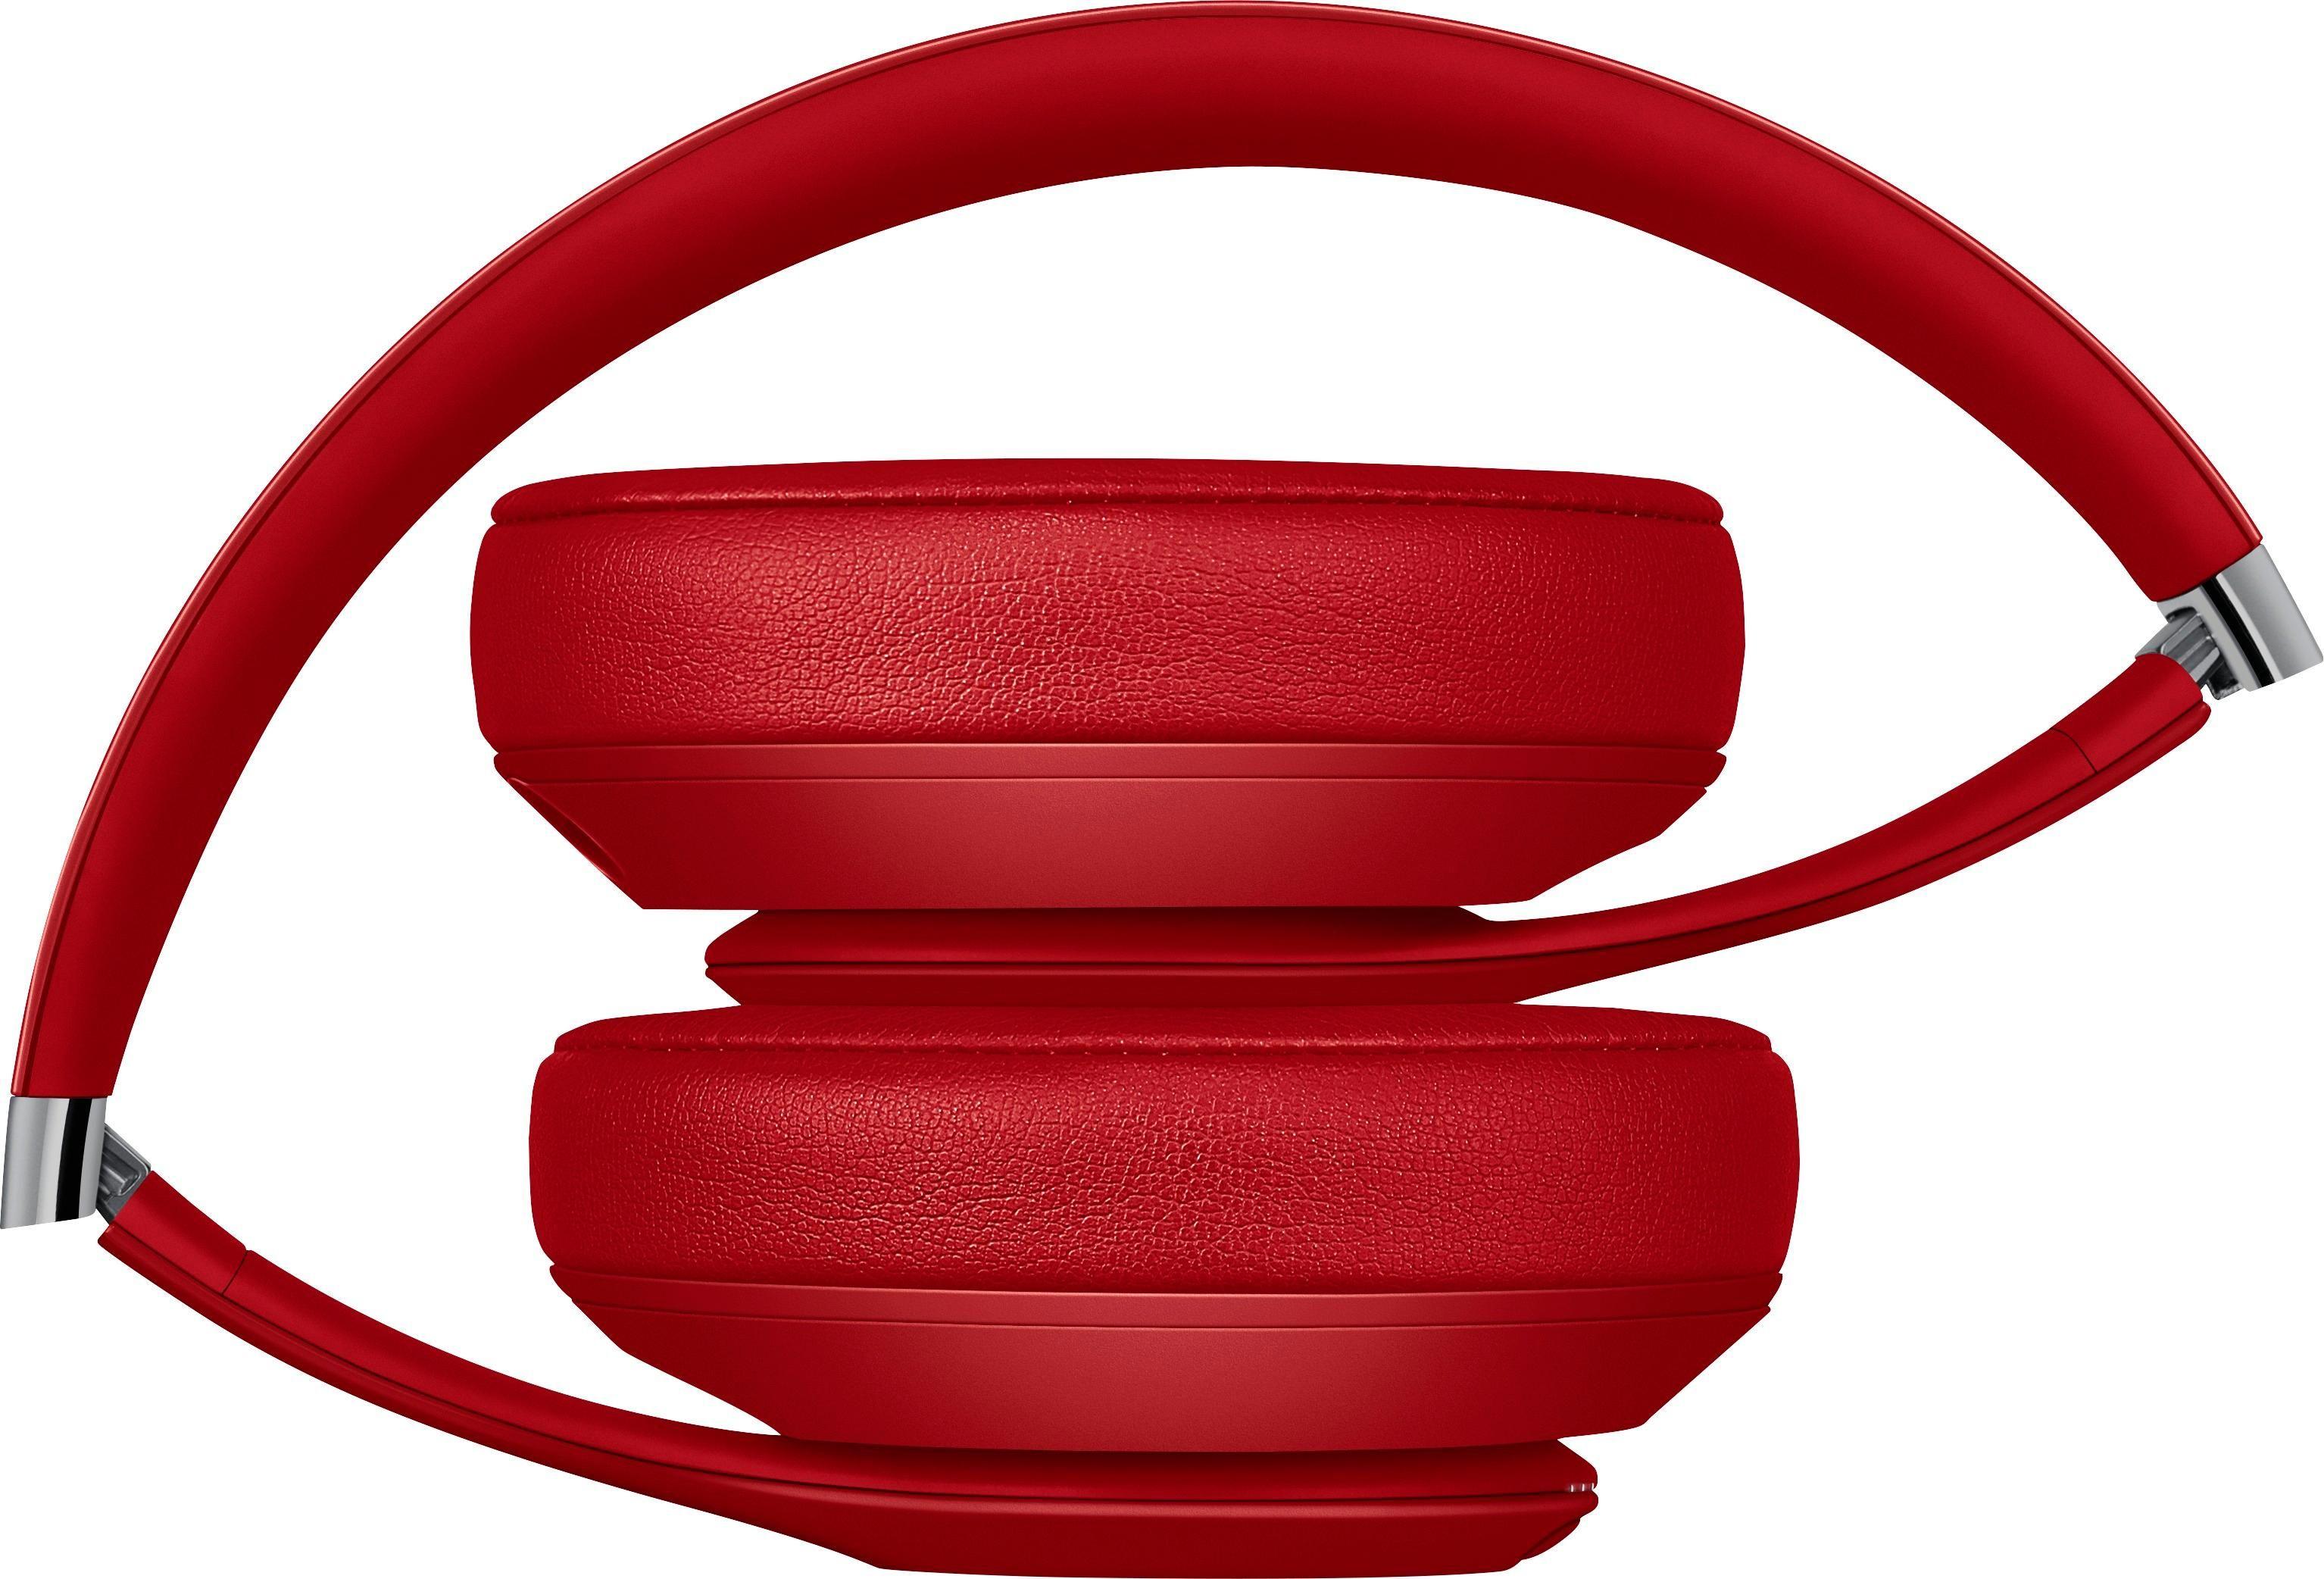 Red Dre Beats Logo - Beats by Dr. Dre Beats Studio³ Wireless Headphones Red MQD02LL/A ...